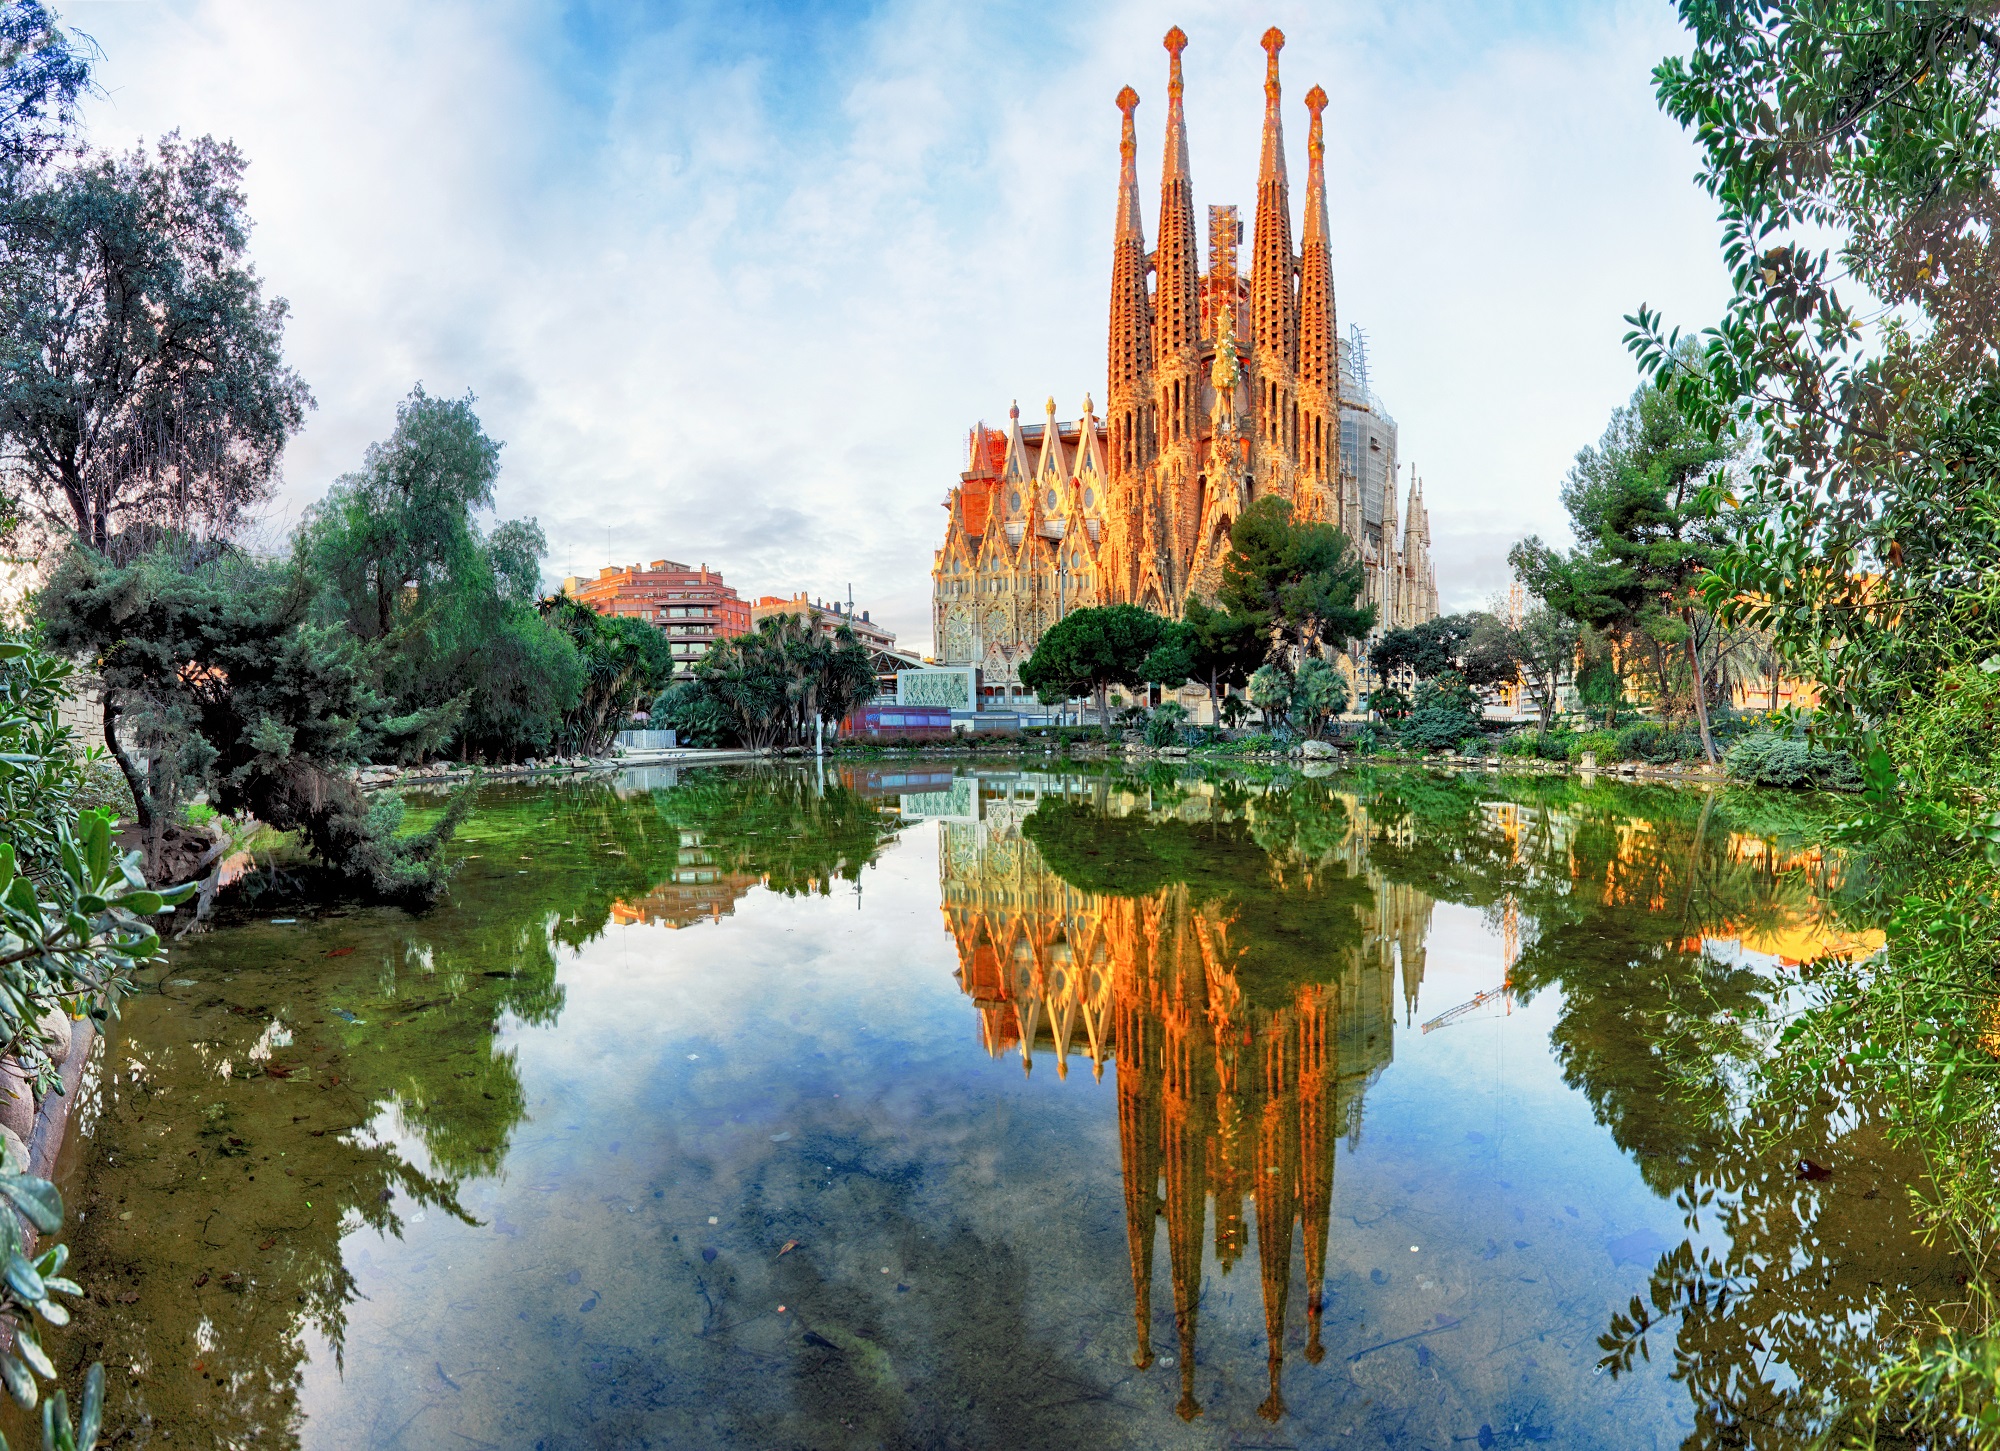 BARCELONA, SPAIN - FEB 10: View of the Sagrada Familia, a large